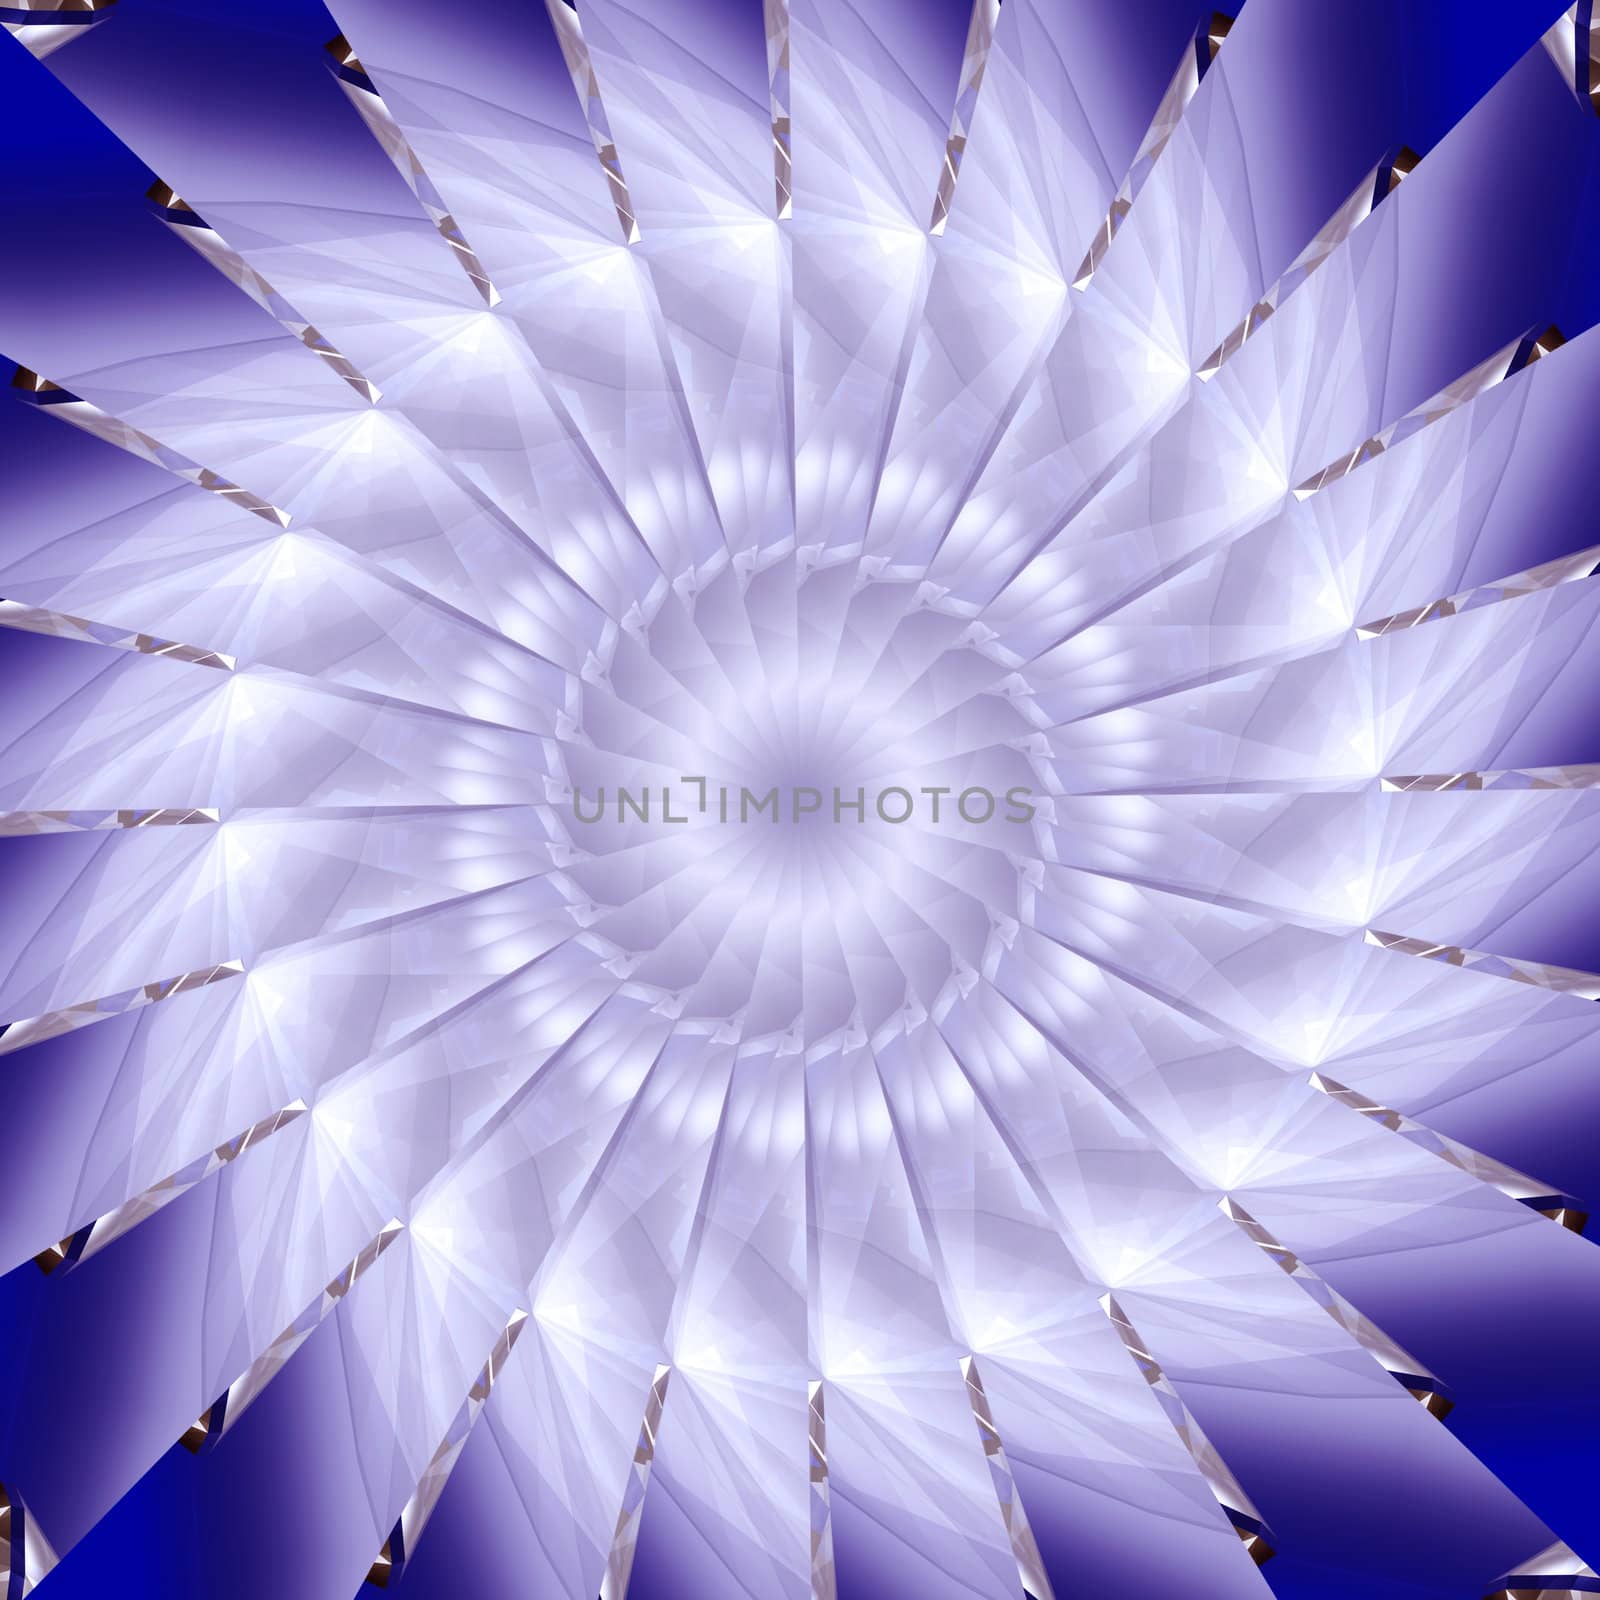 A kaleidoscope background of blue segments